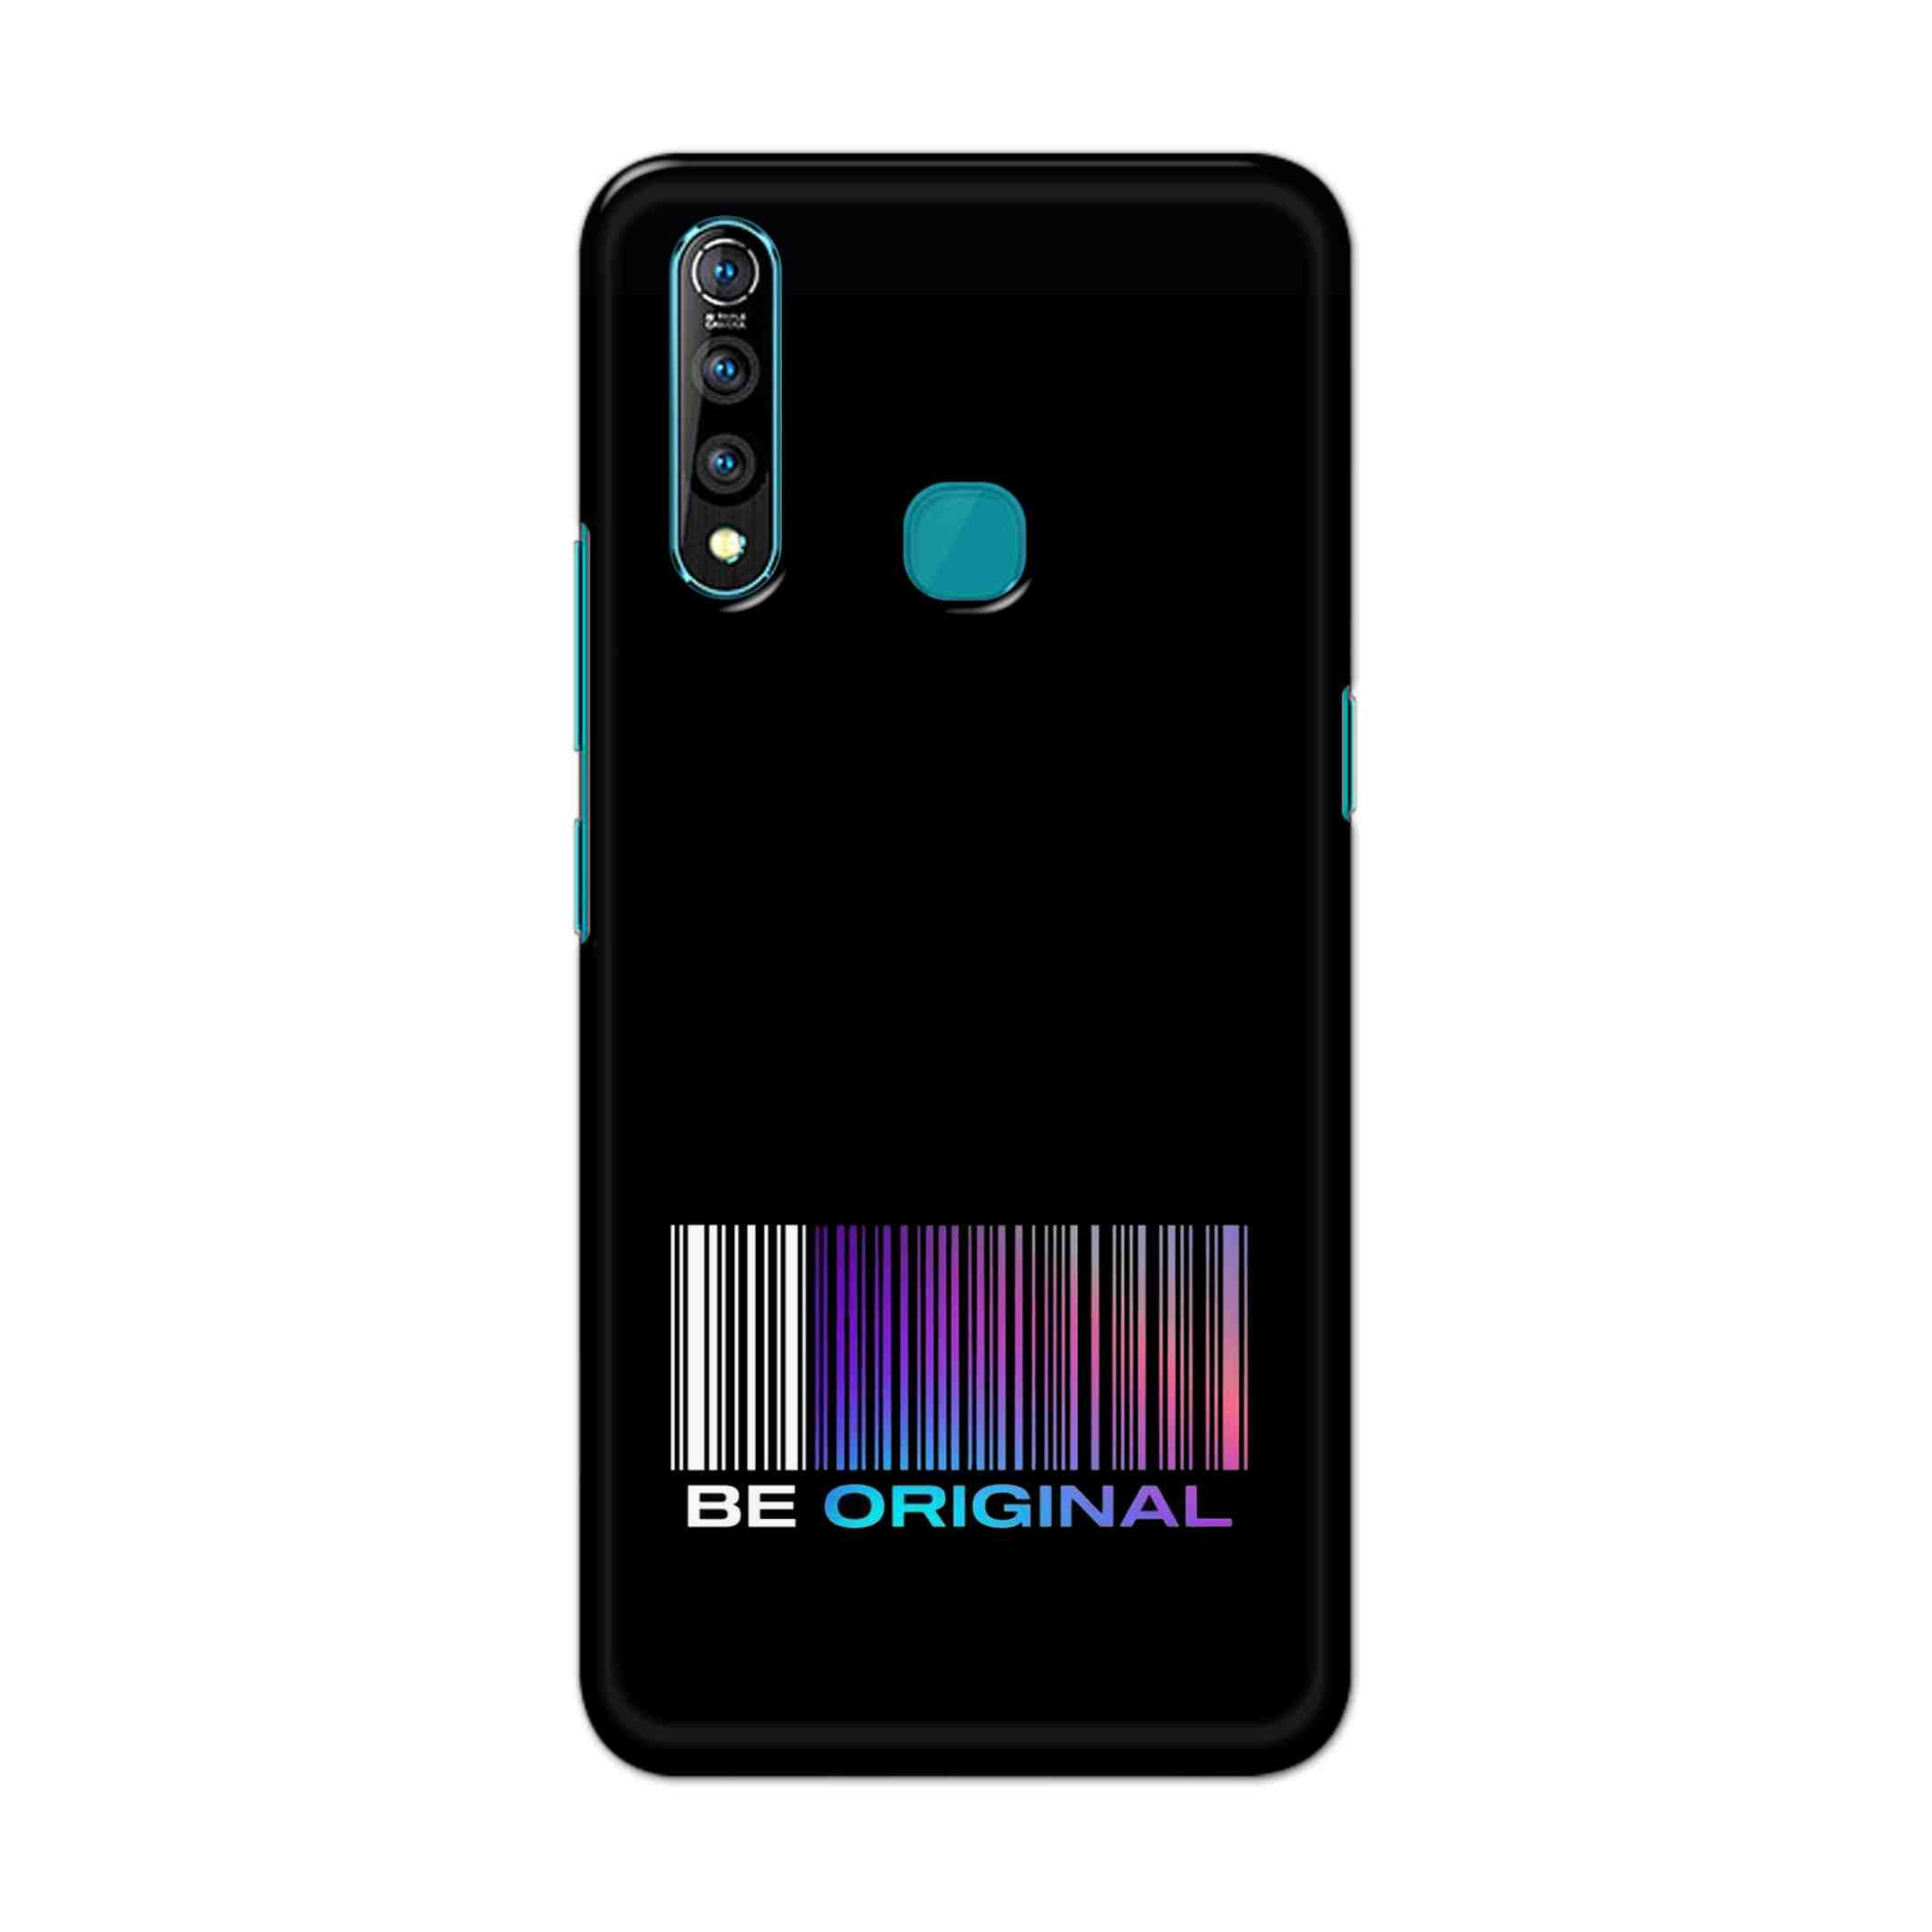 Buy Be Original Hard Back Mobile Phone Case Cover For Vivo Z1 pro Online